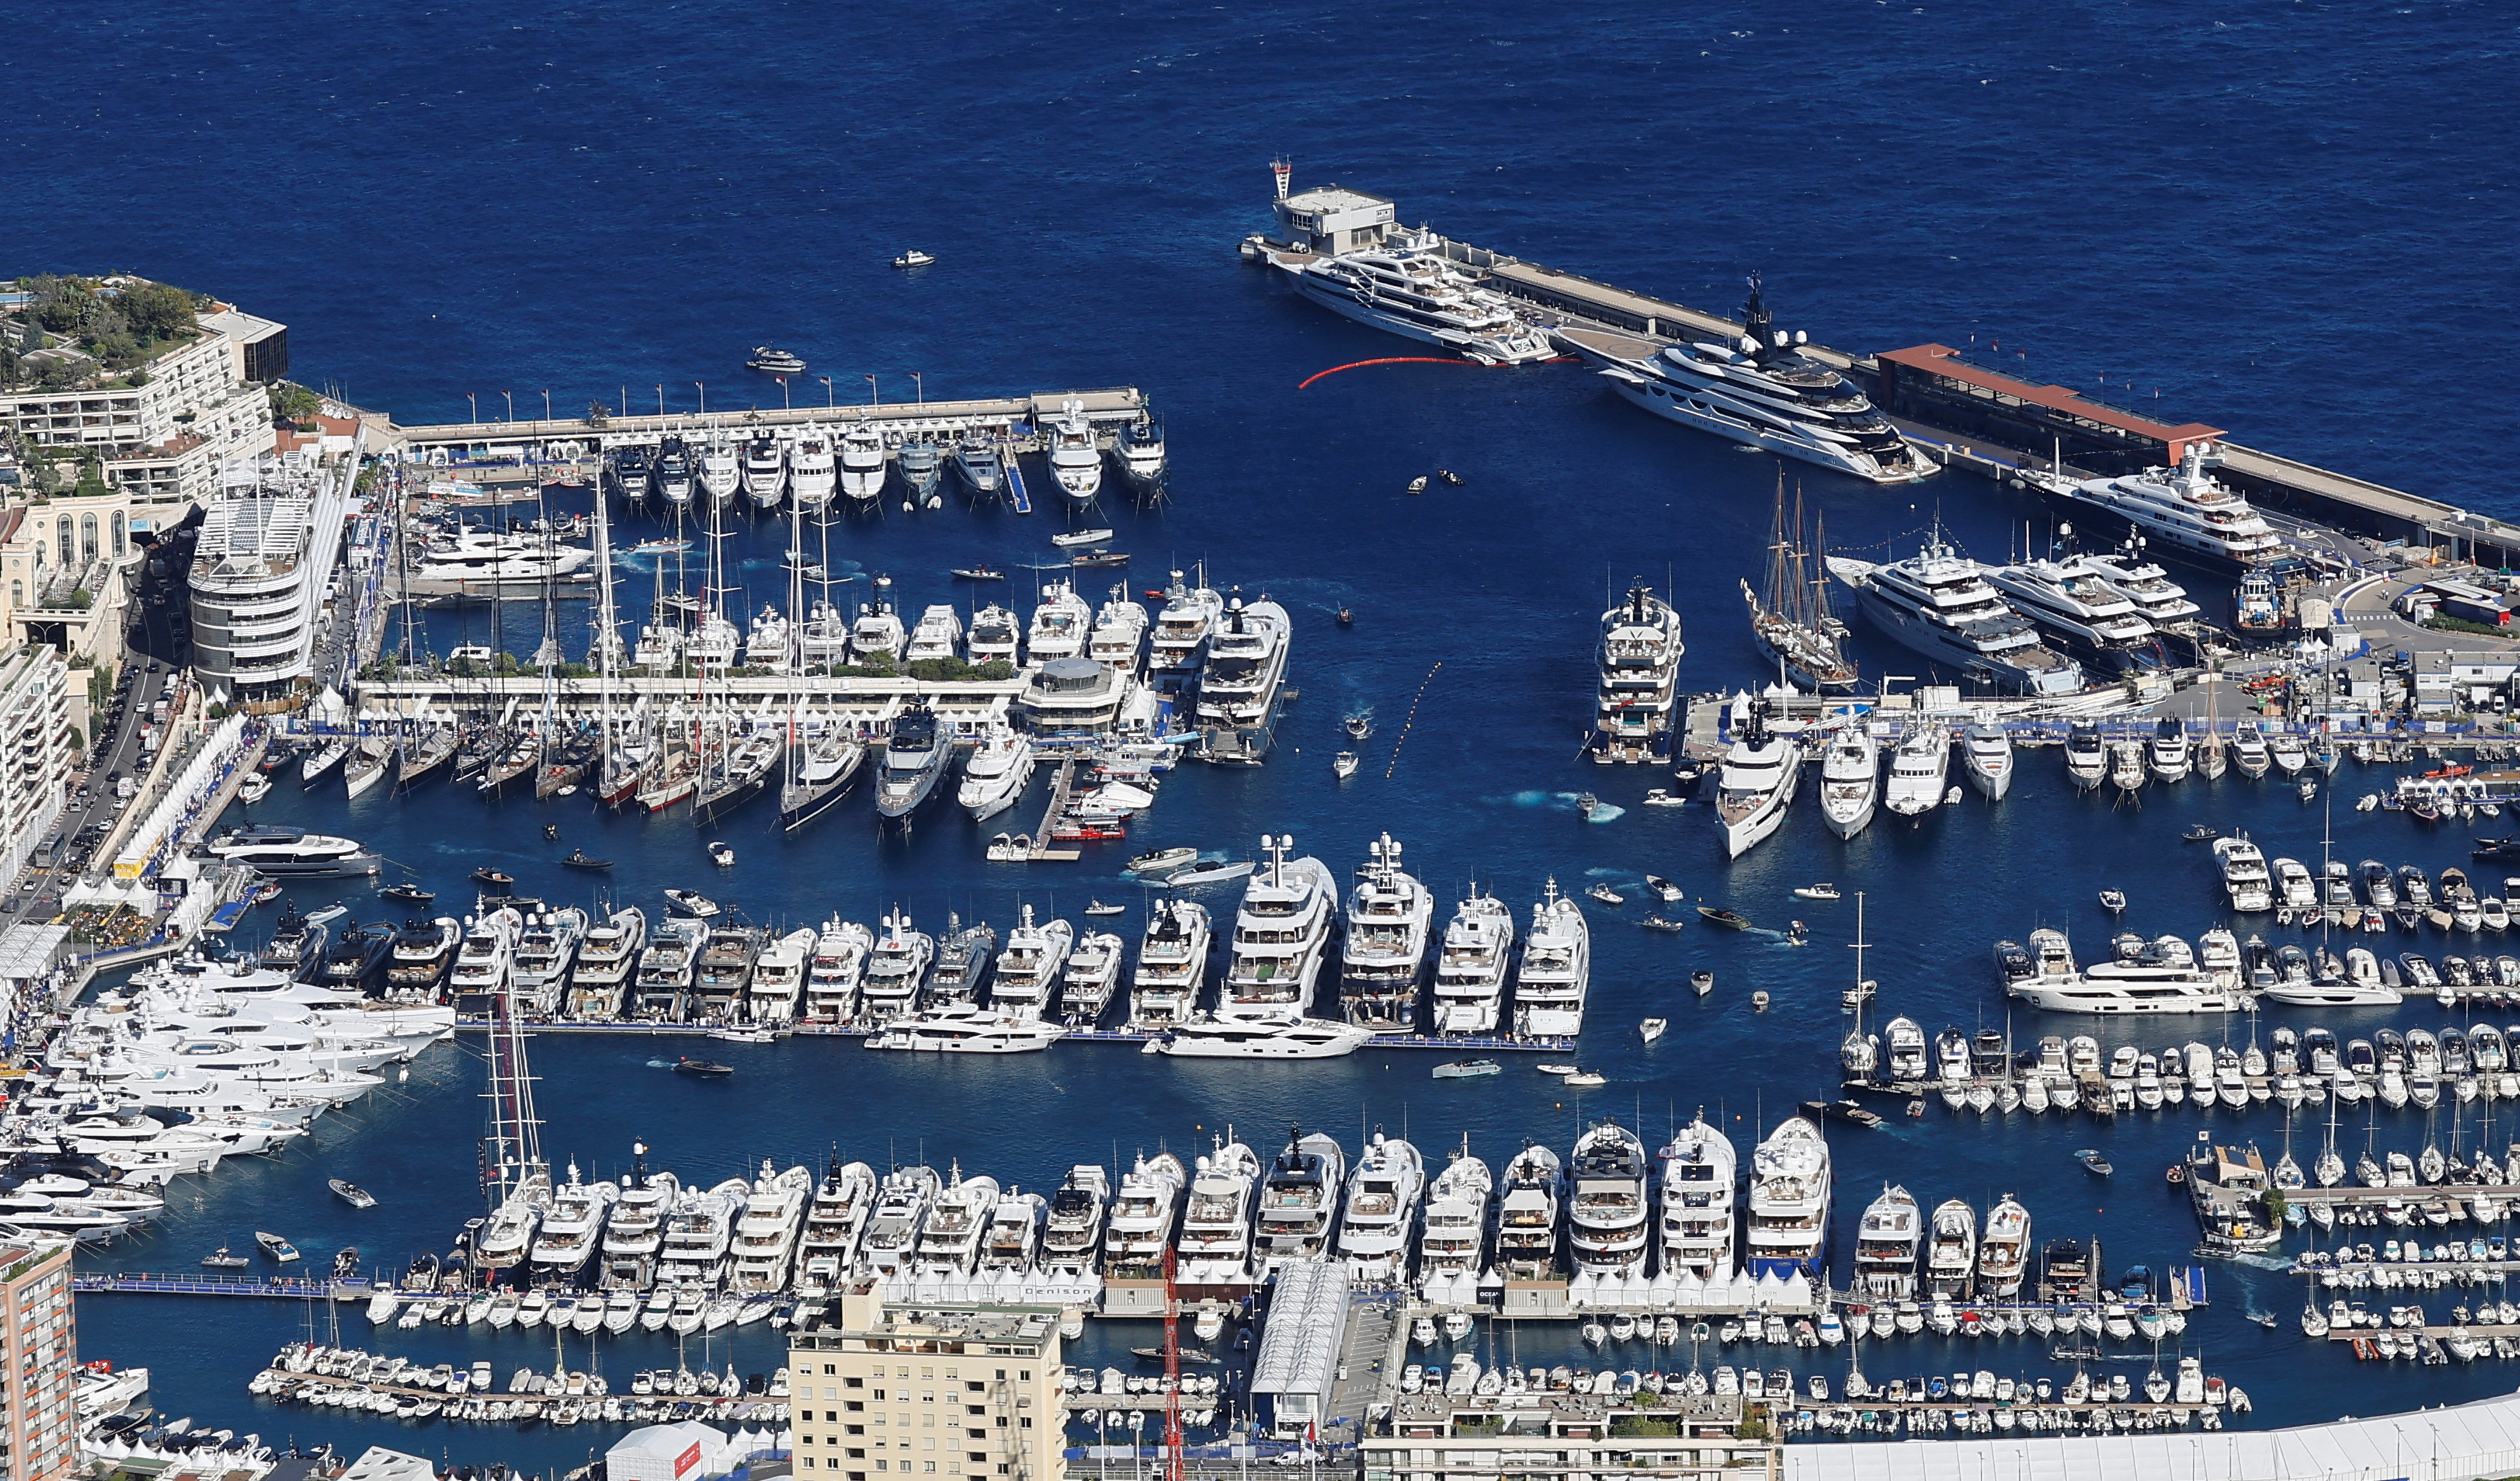 Monaco Yacht Show in the port of Monaco